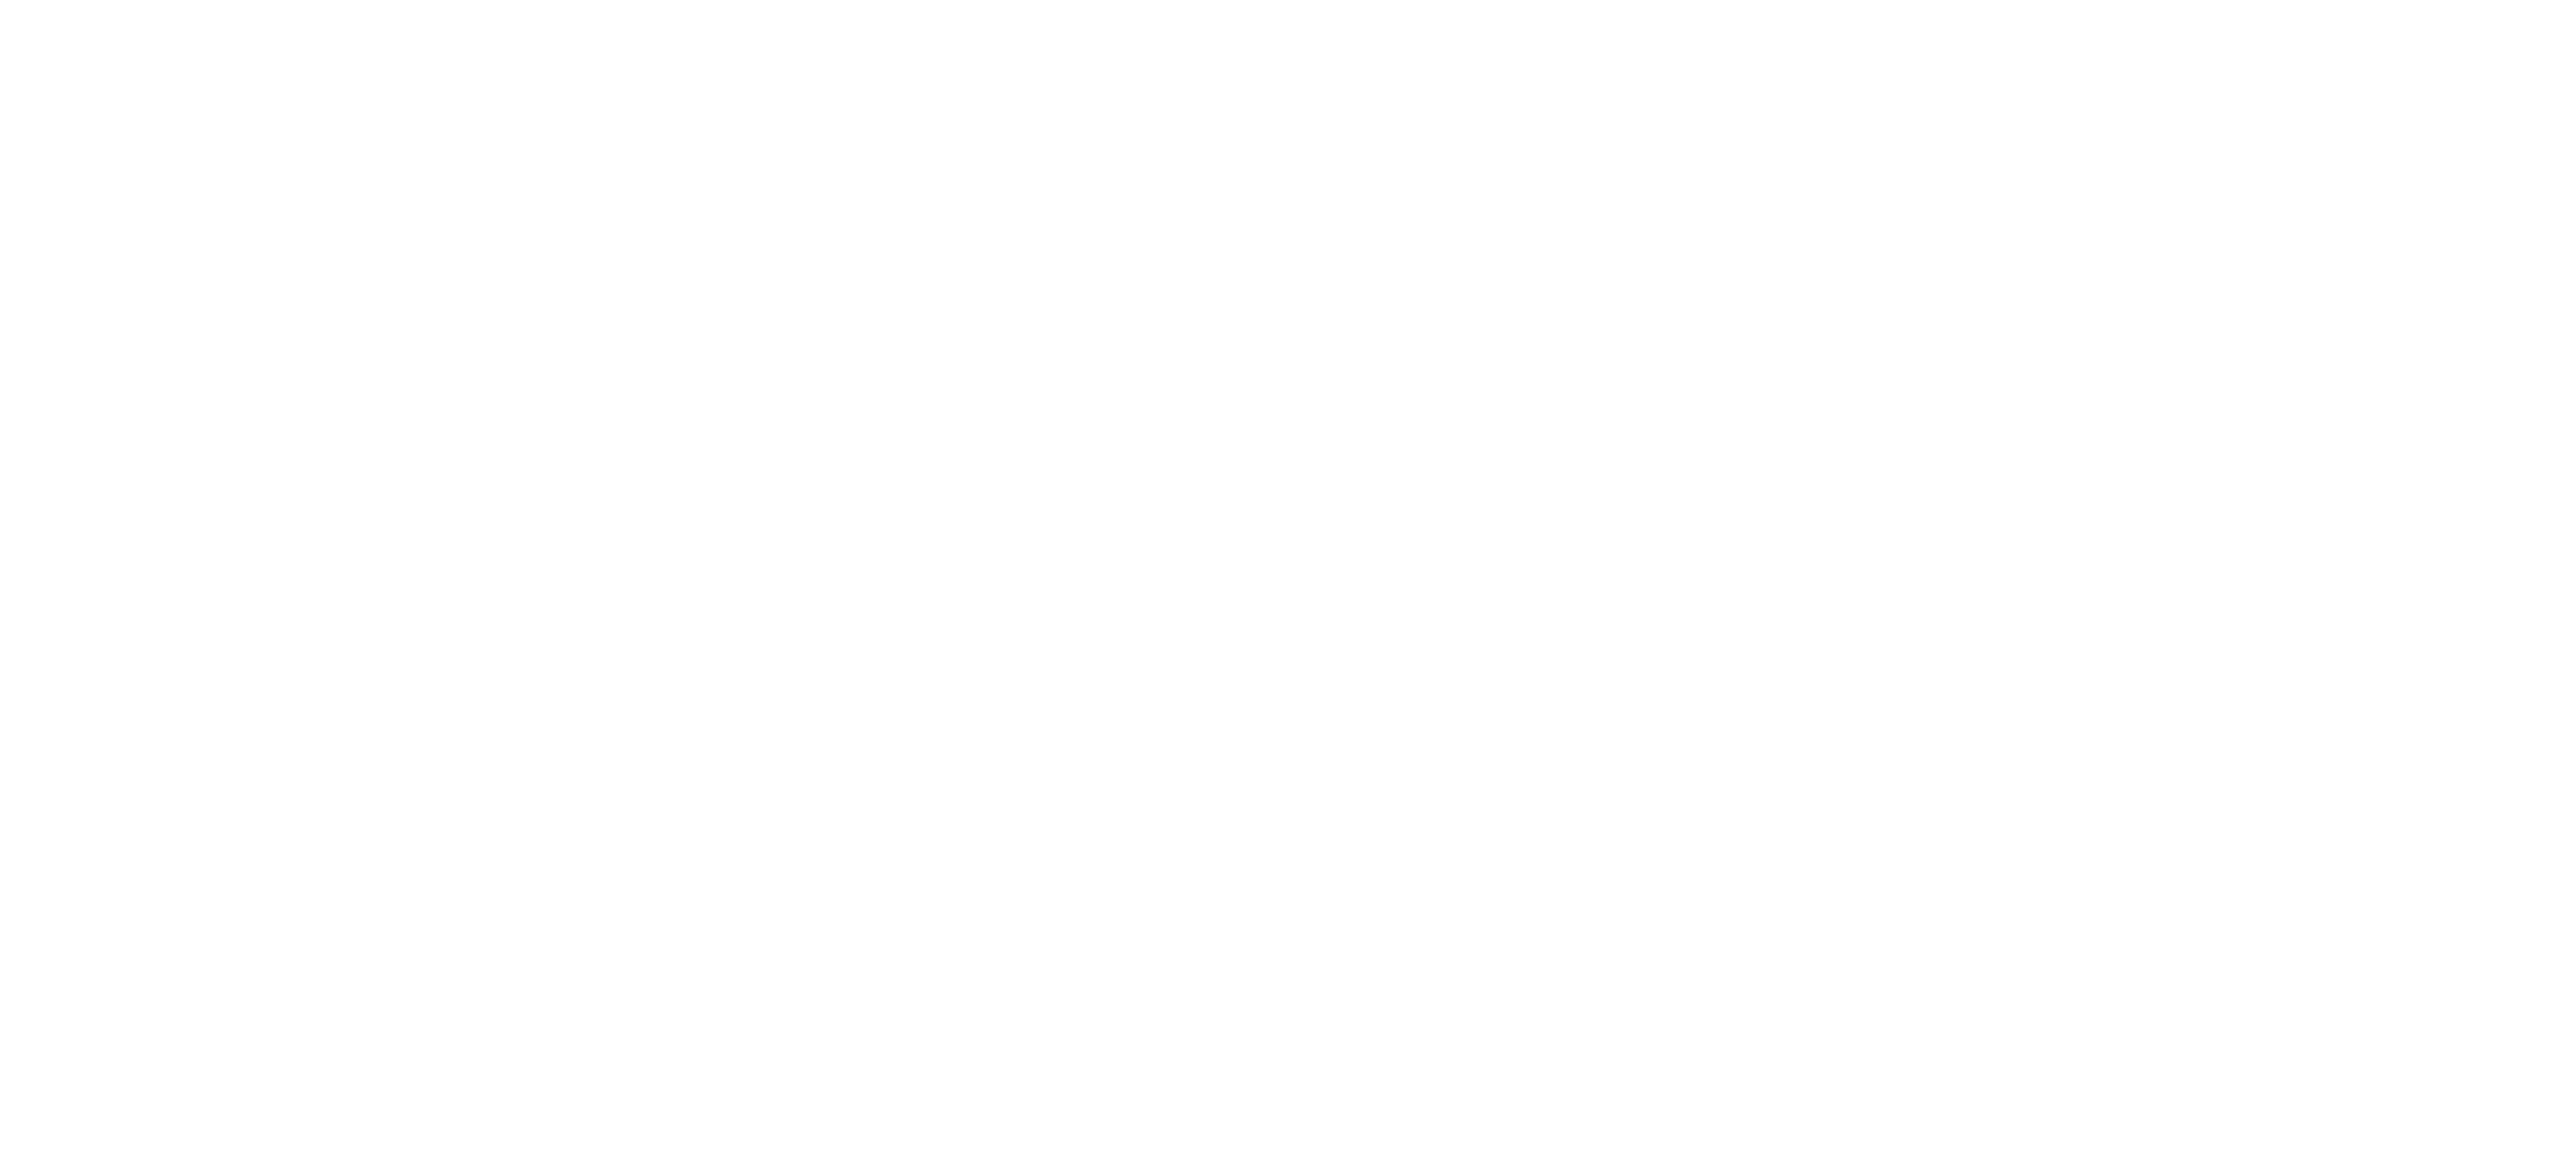 226Lab - Agenzia creativa svizzera